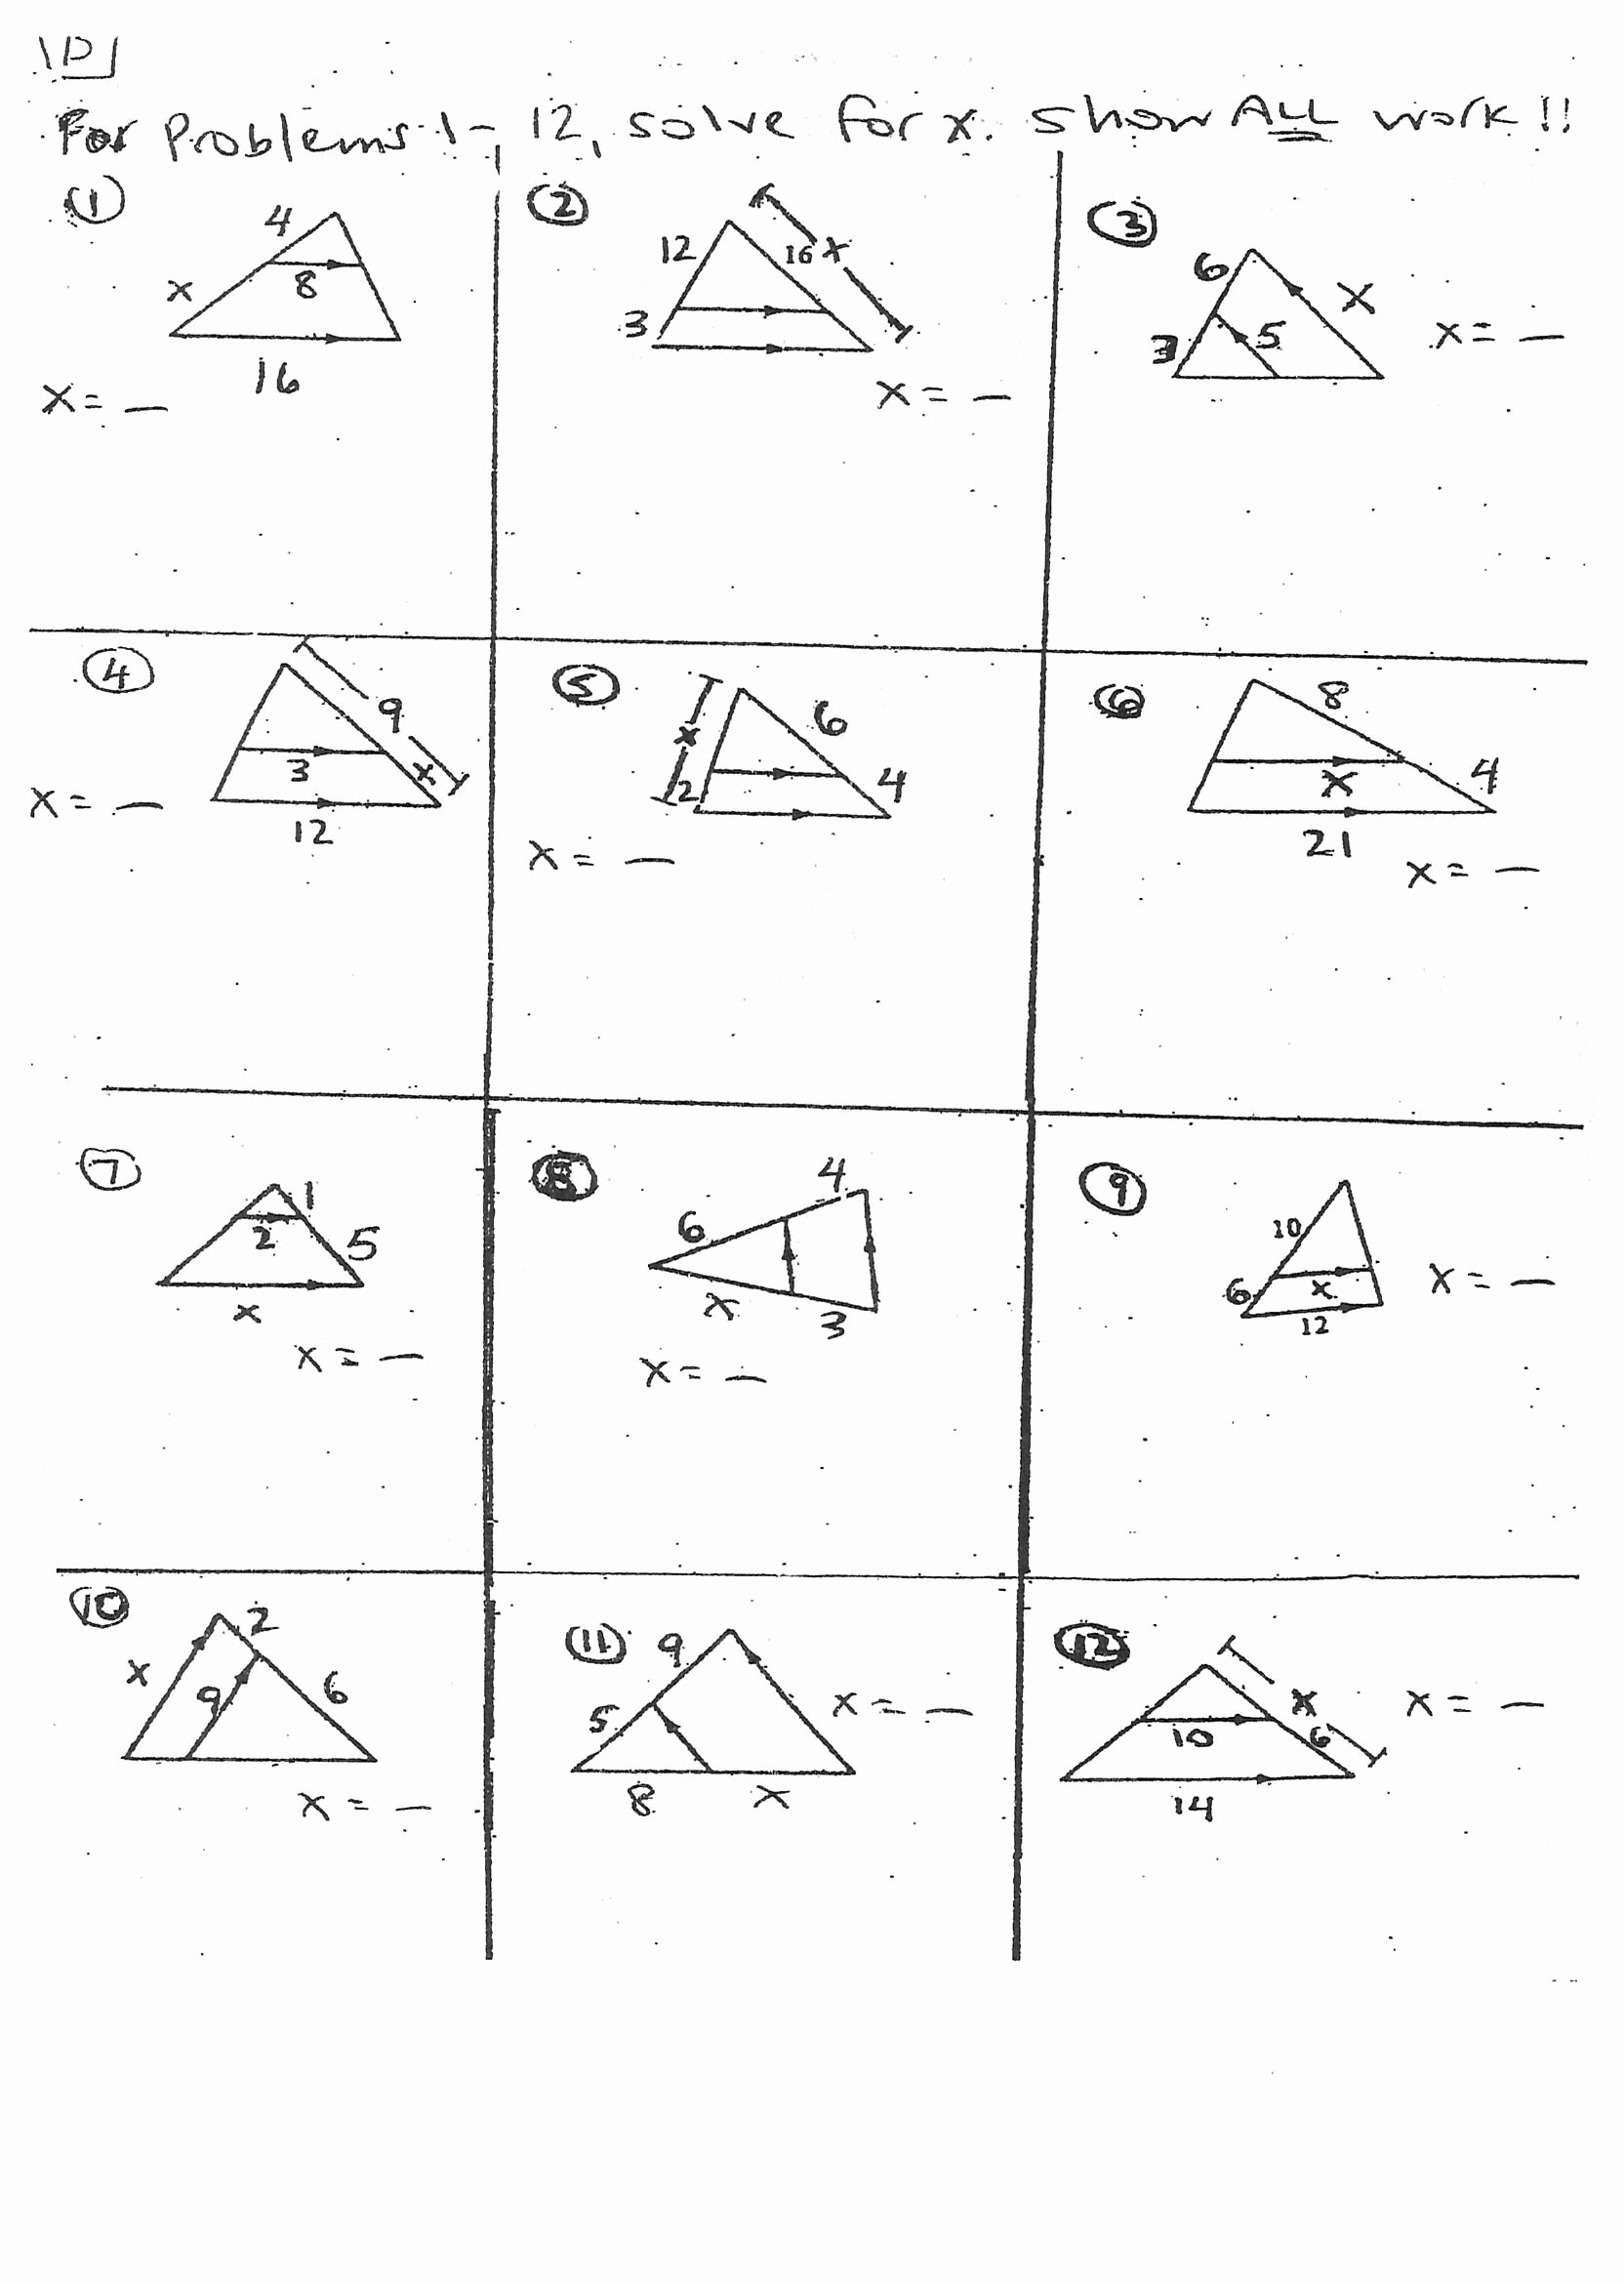 Midsegment theorem Worksheet Answer Key Best Of Image Result for Triangle Midsegments Worksheet